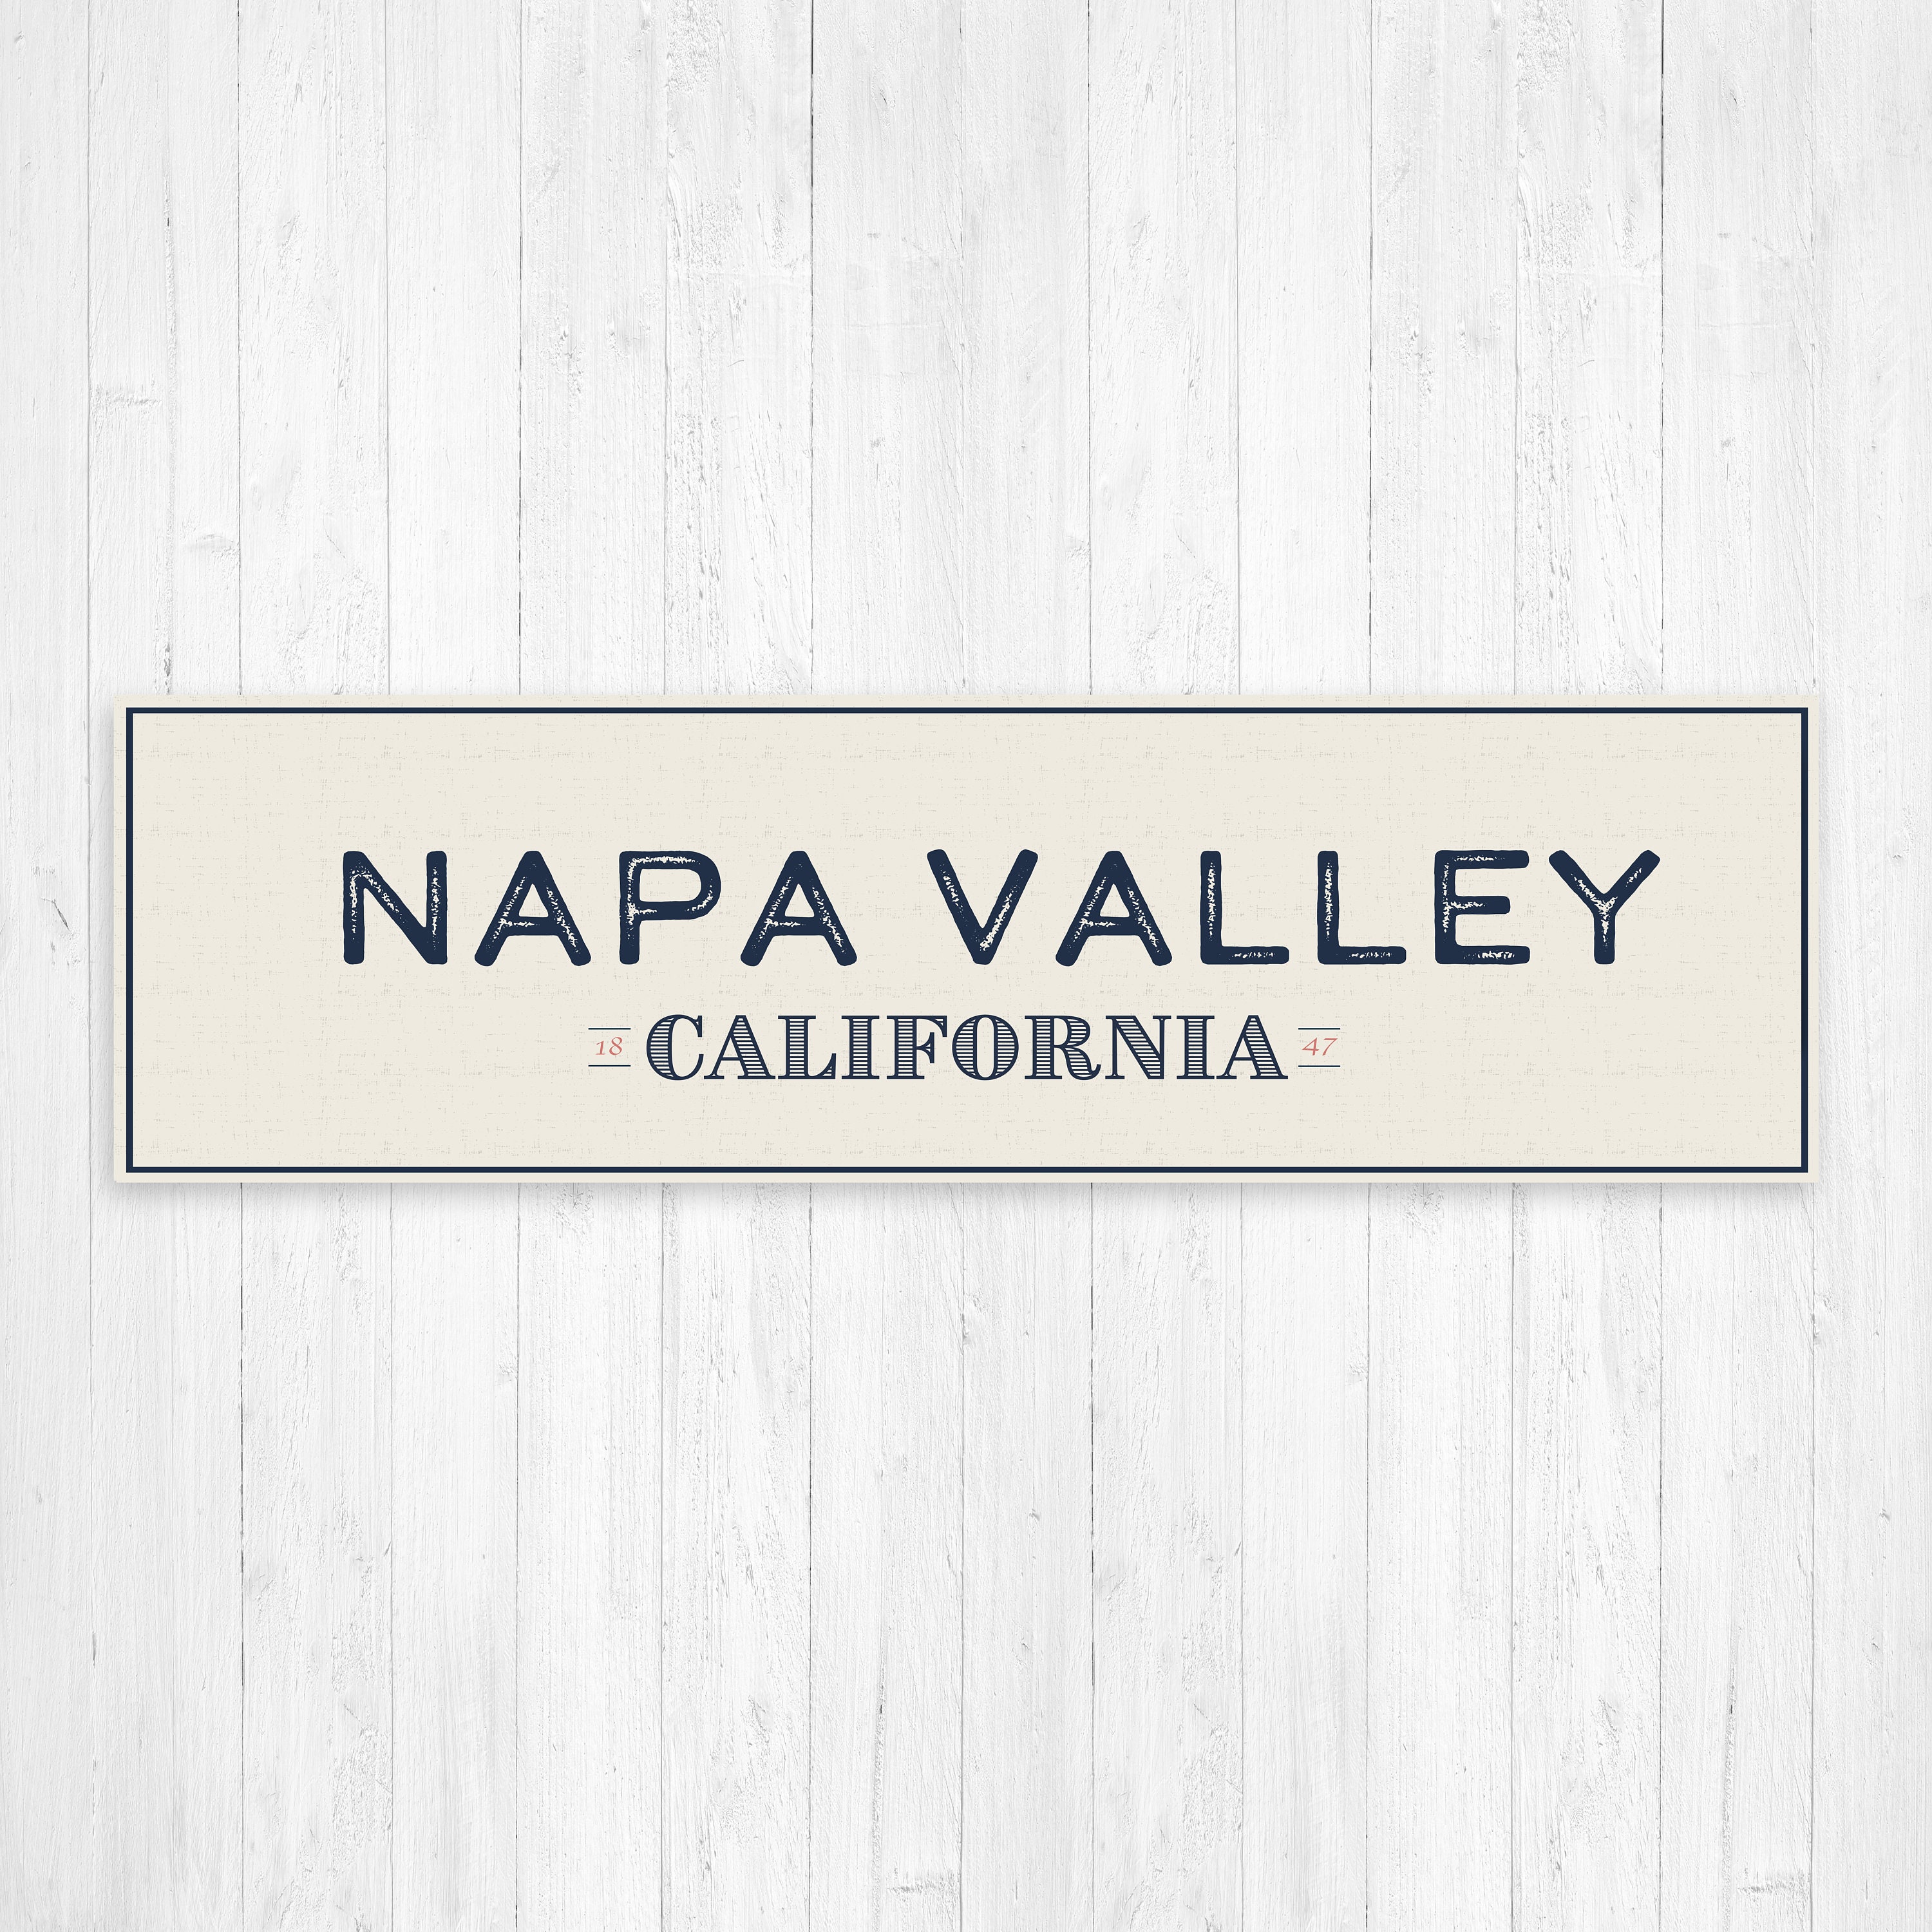 Napa Valley, Gps Coordinates, Wanderlust, Living Room Decor, Travel Wine Country California Print, Canvas Home